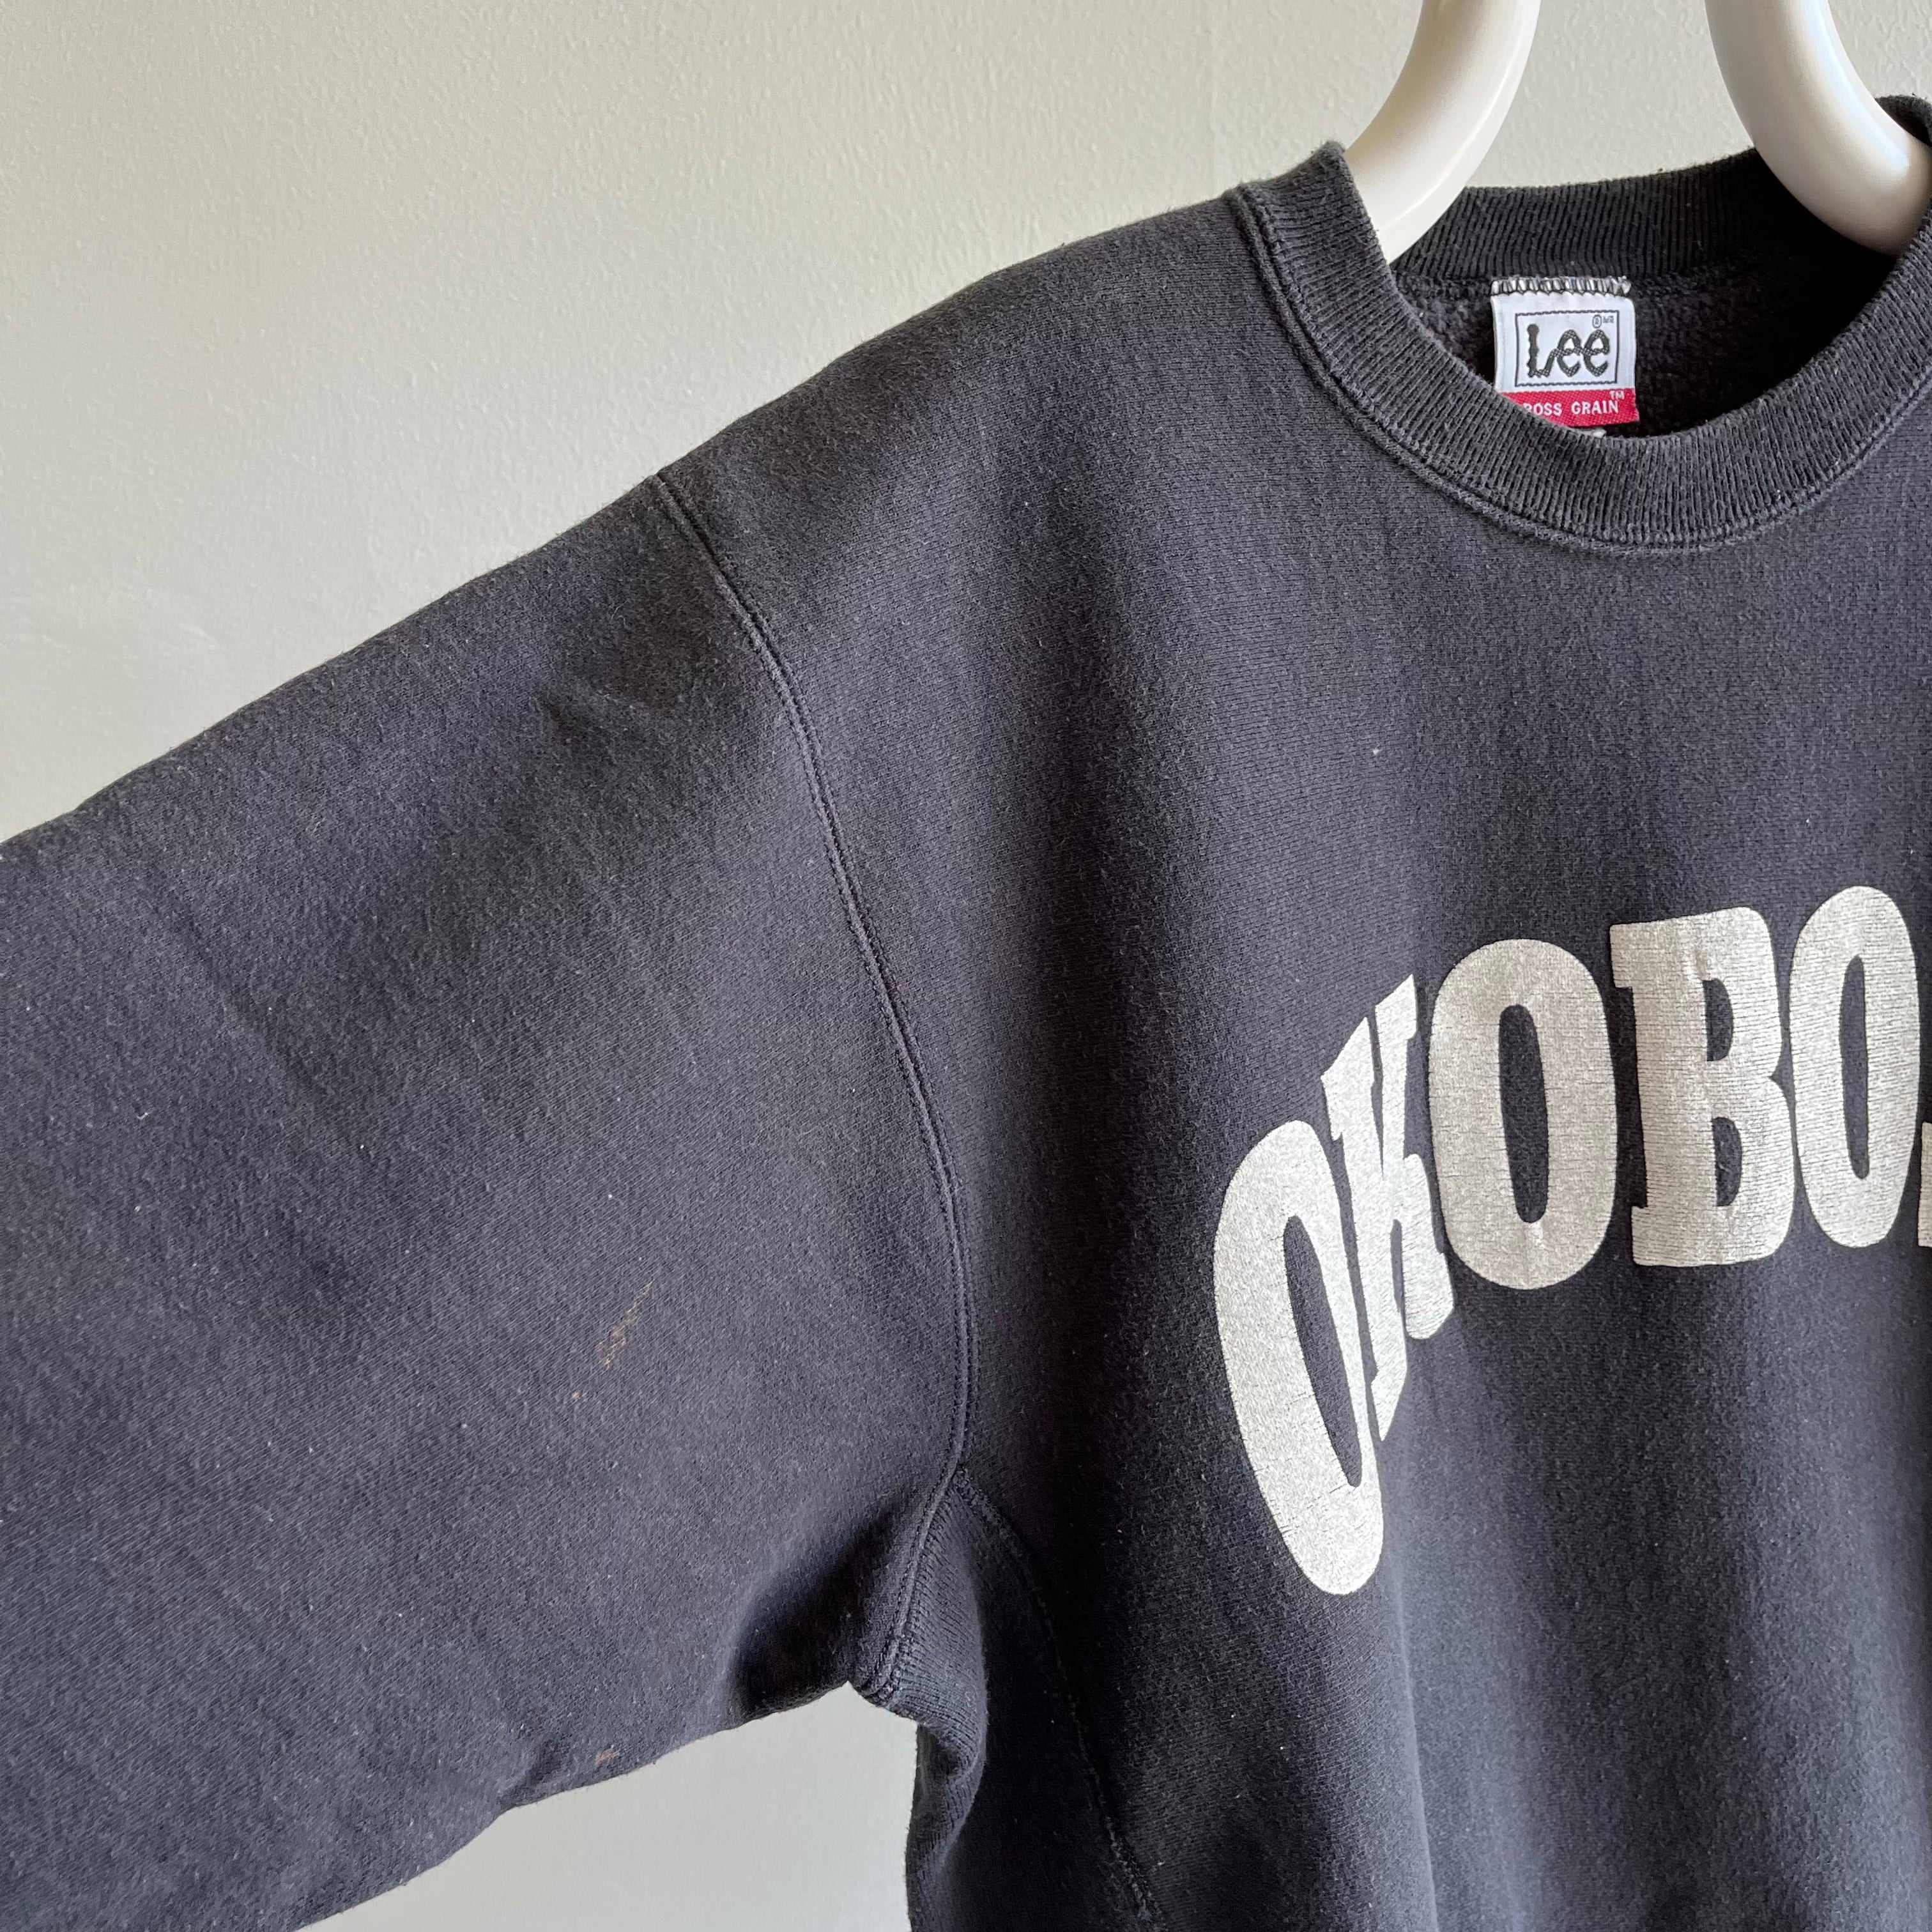 1990s Okoboji, Iowa Reverse Weave Sweatshirt